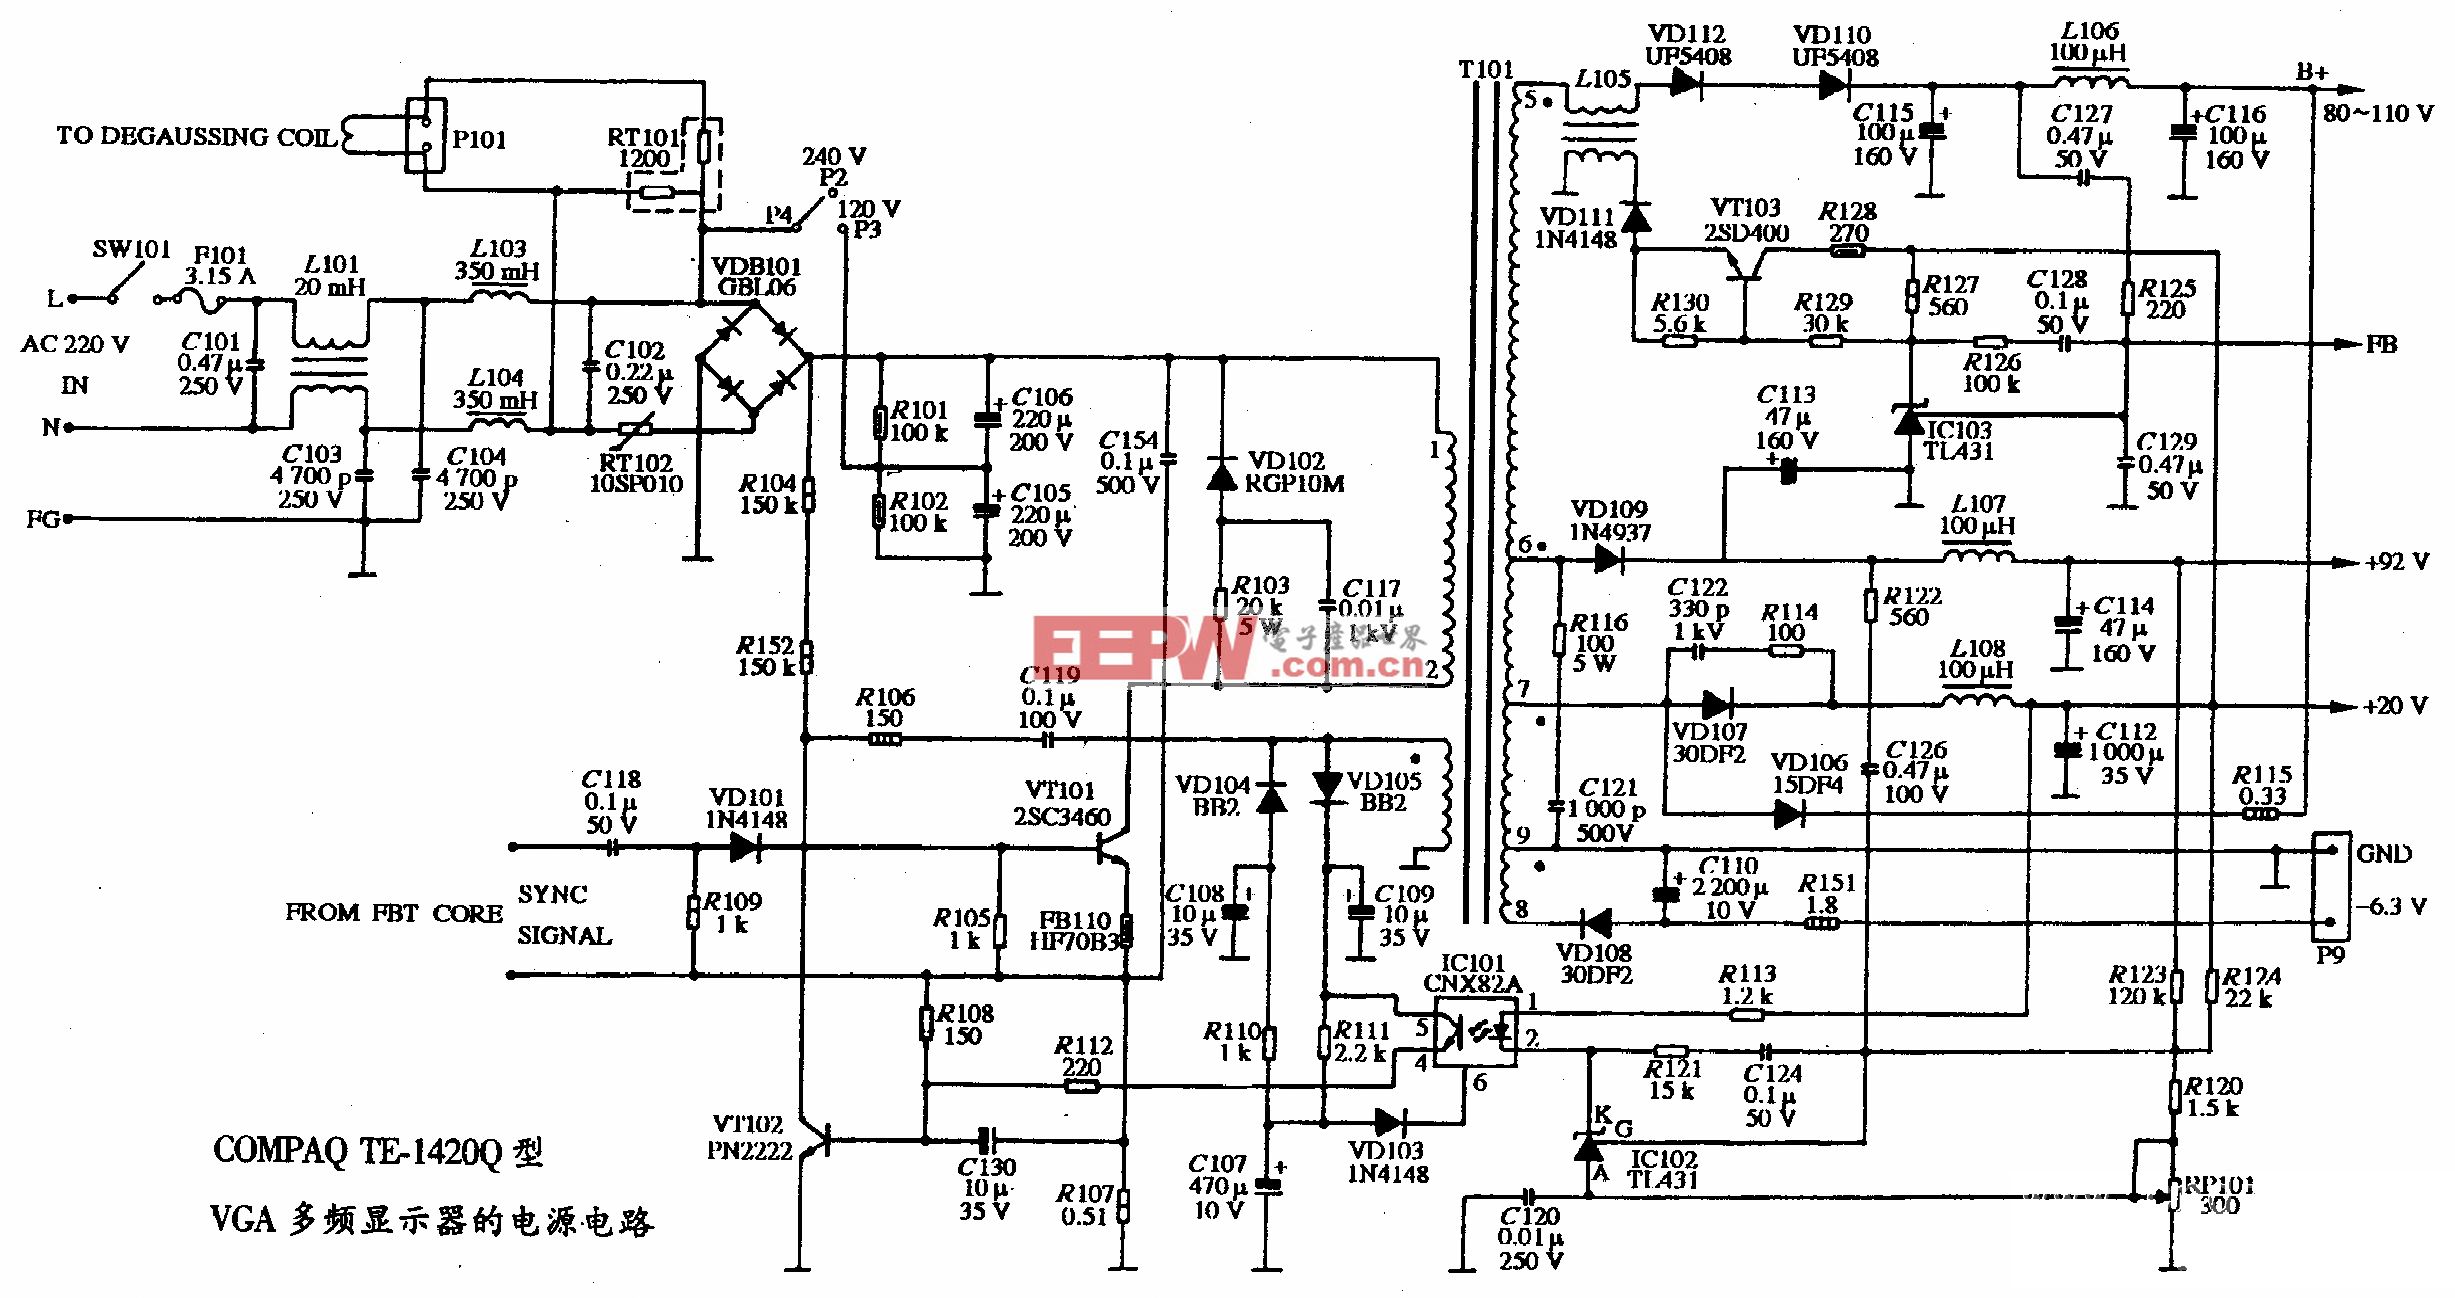 COMPAQ TE-1420Q型VGA多频显示器的电源电路图